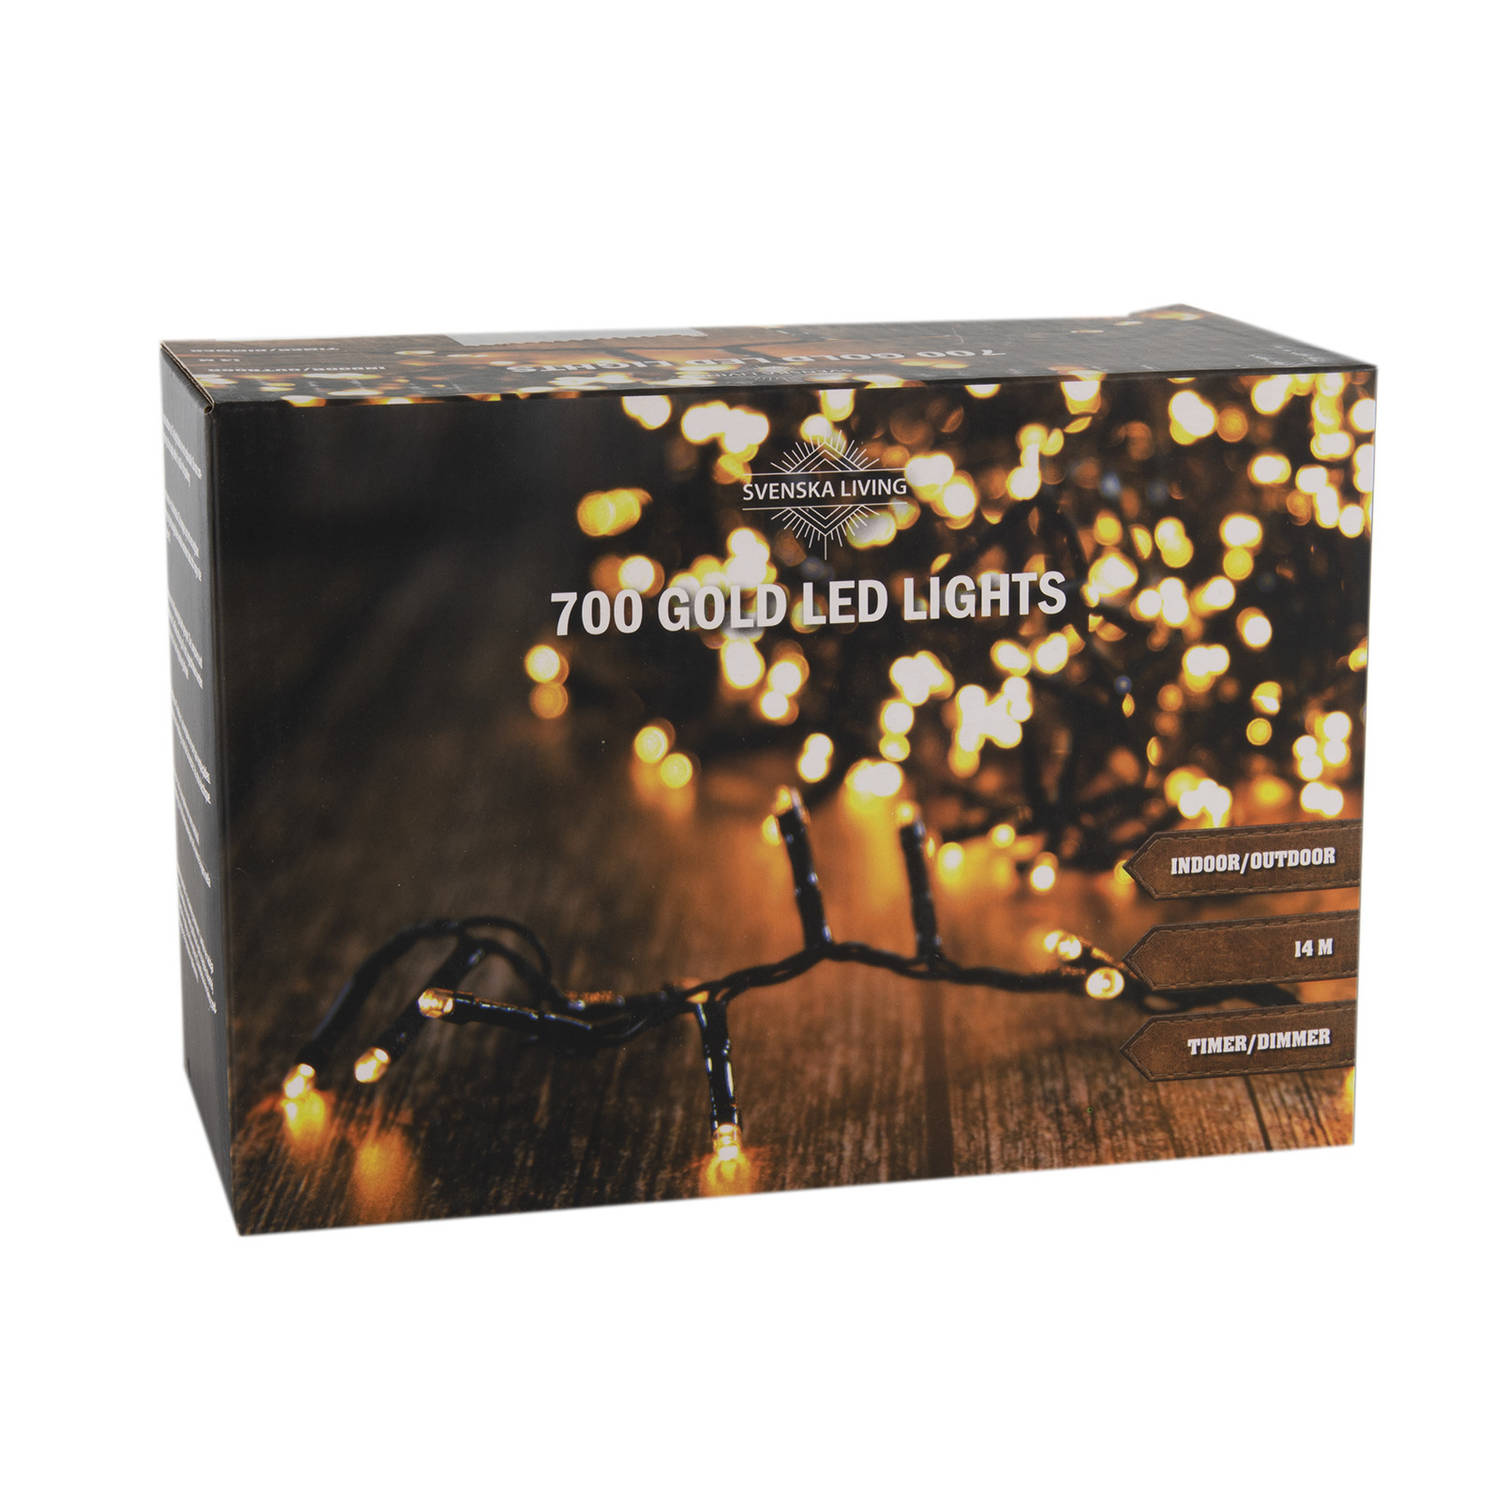 Svenska Living Kerstverlichting - 700 lampjes - goud licht - 1400 cm - Kerstverlichting kerstboom